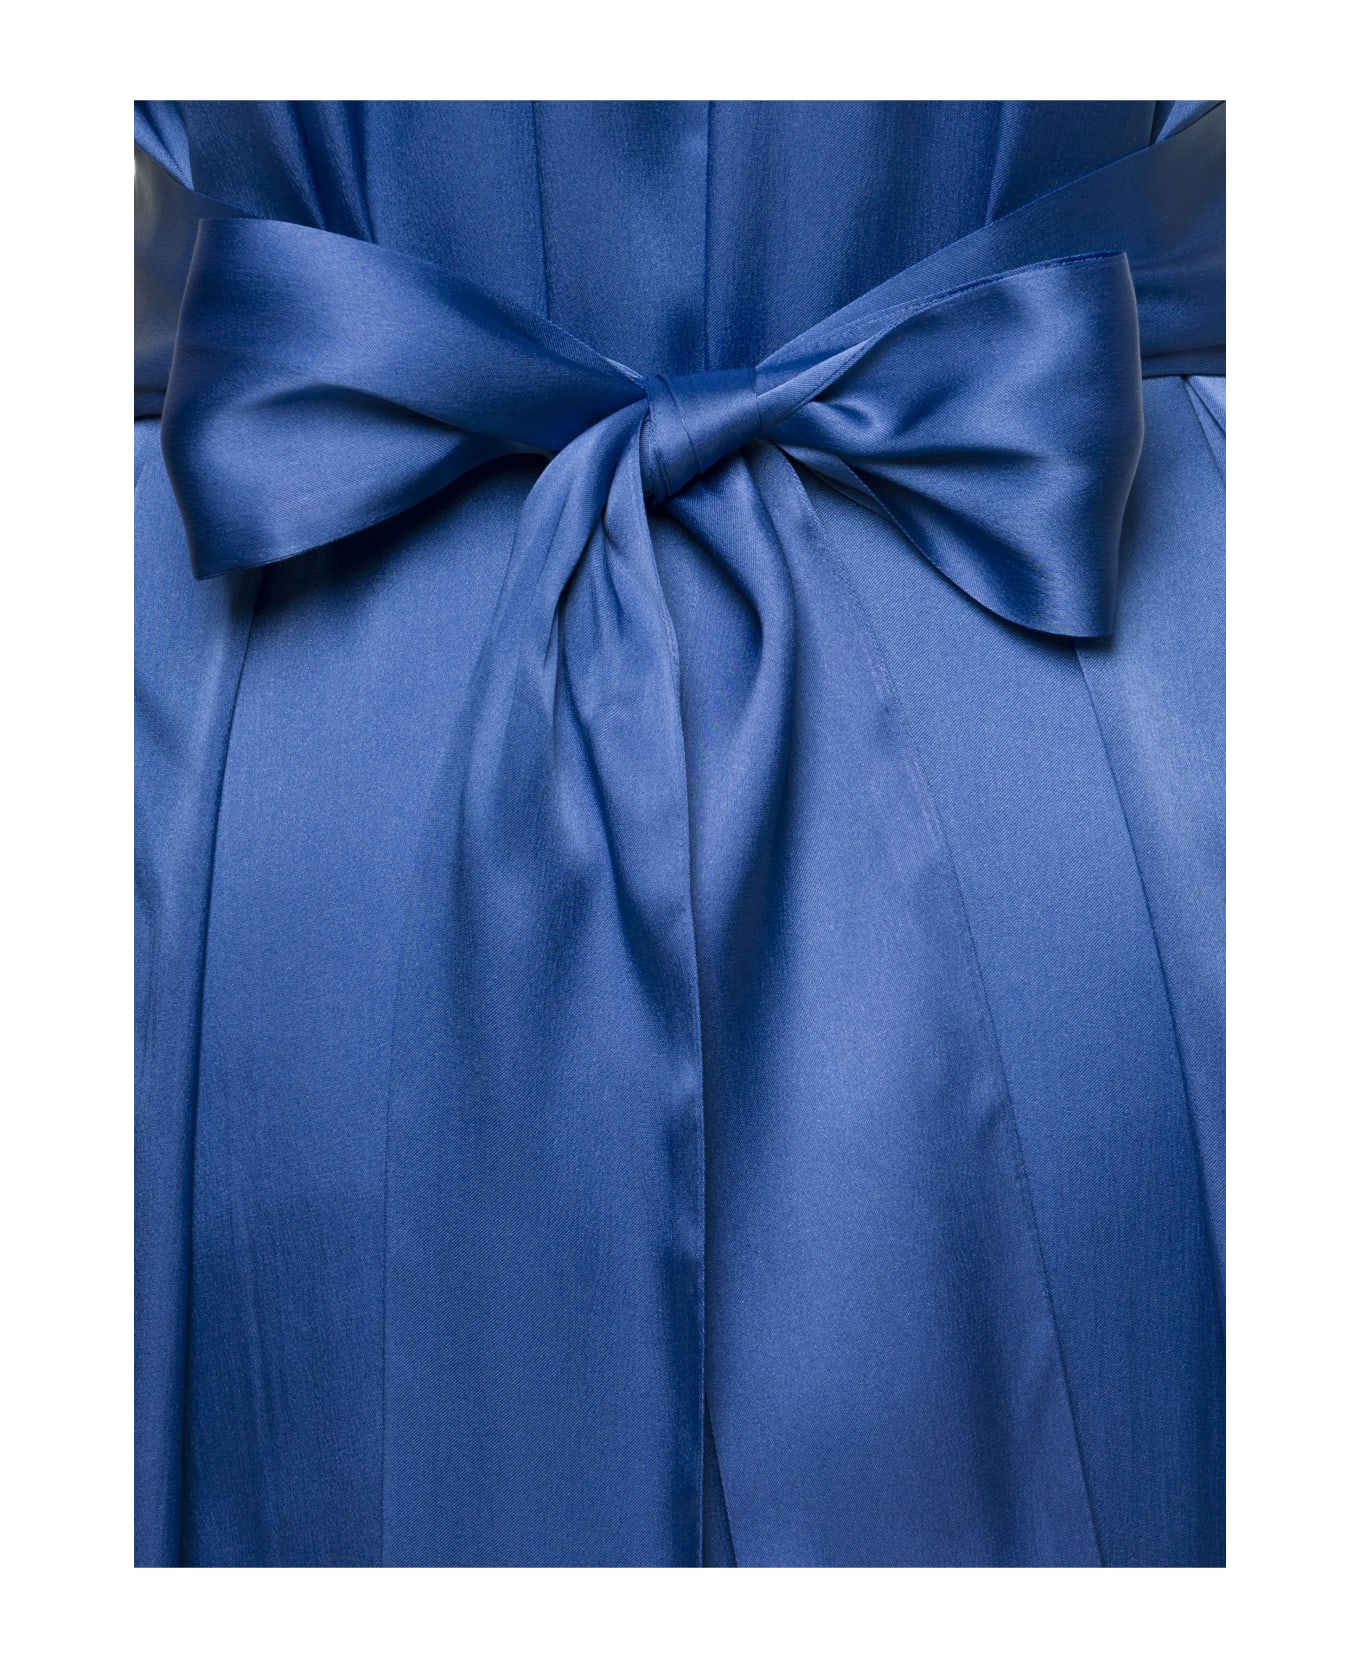 SEMICOUTURE Blue Maxi Dress V-neck Draped Design Satin Finish With Rear Ribbon Fastening In Silk Blend Woman - Blu